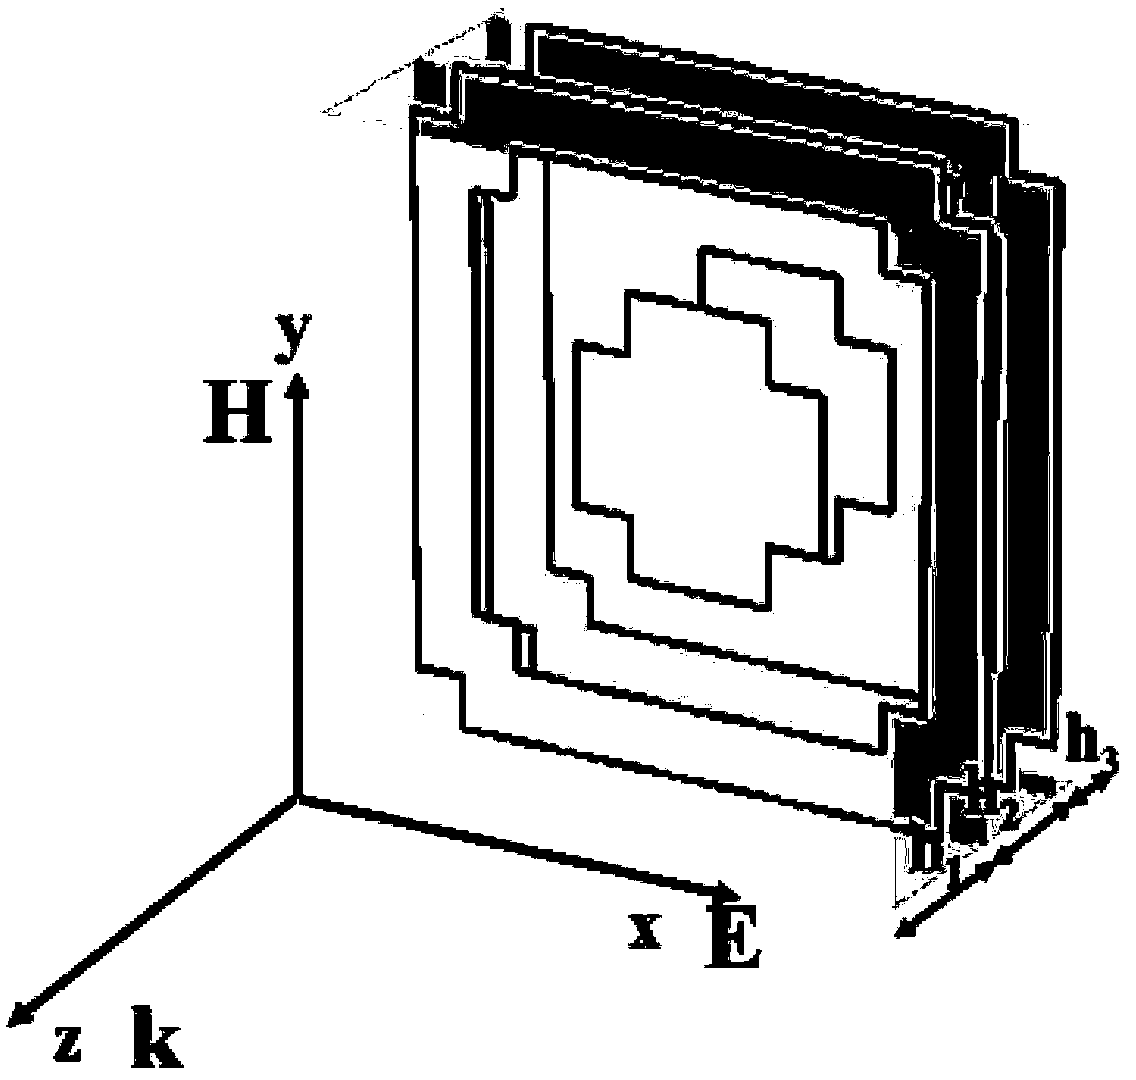 Manufacturing method of a novel terahertz ultra-wide passband filter